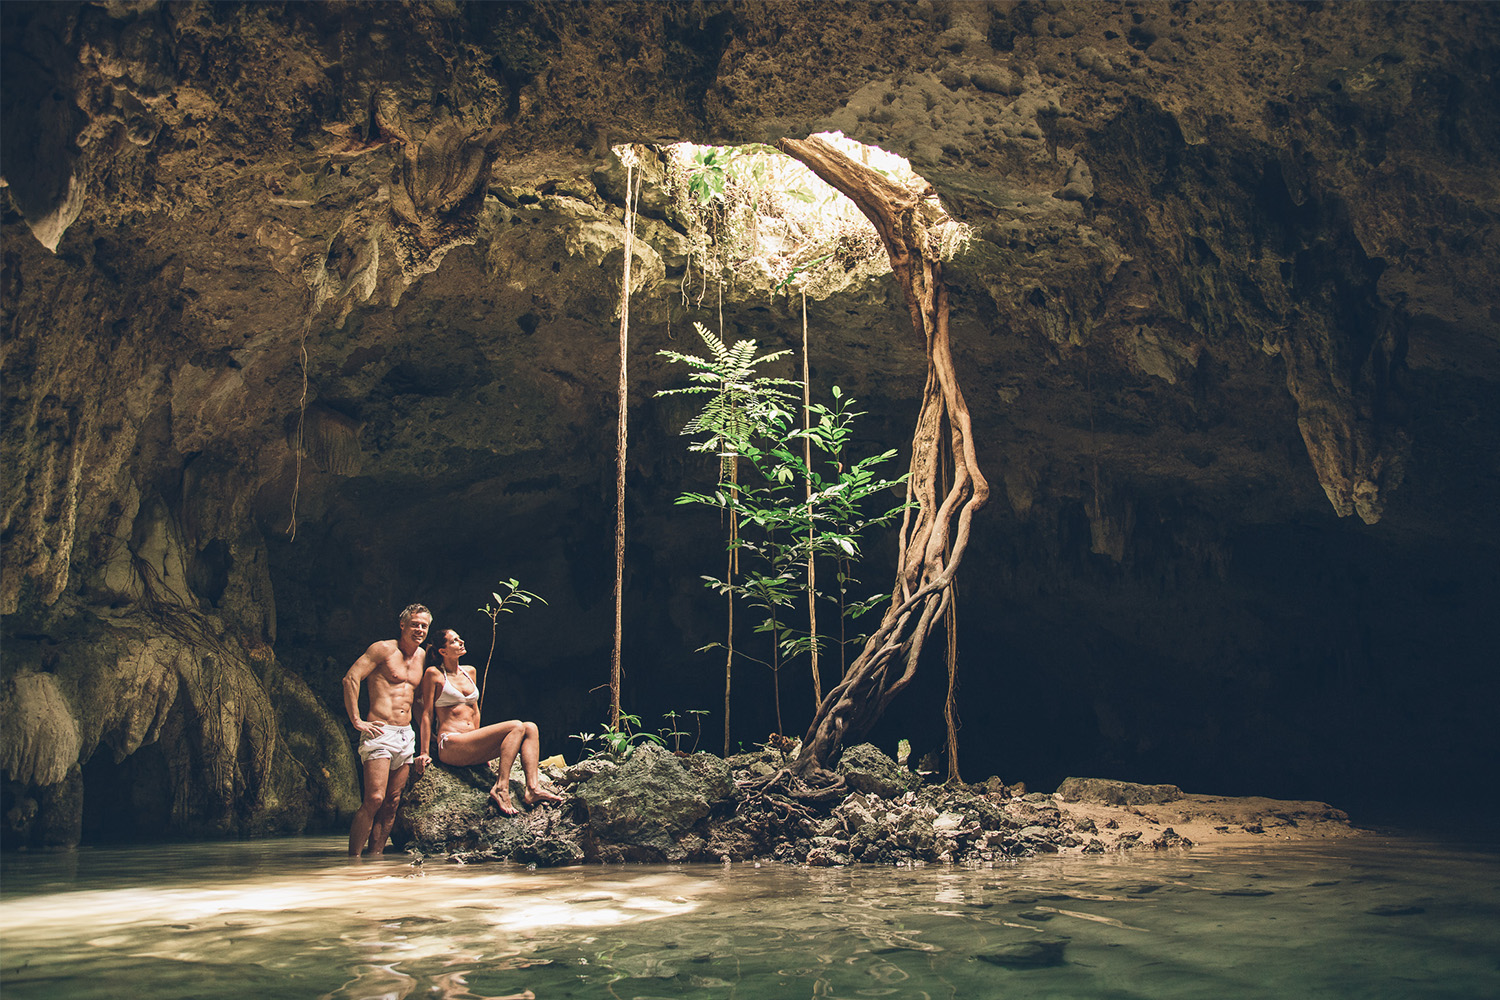 Bushman Photo - Private Tours Riviera Maya - Cenote Exploration - Cenote Photoshoot